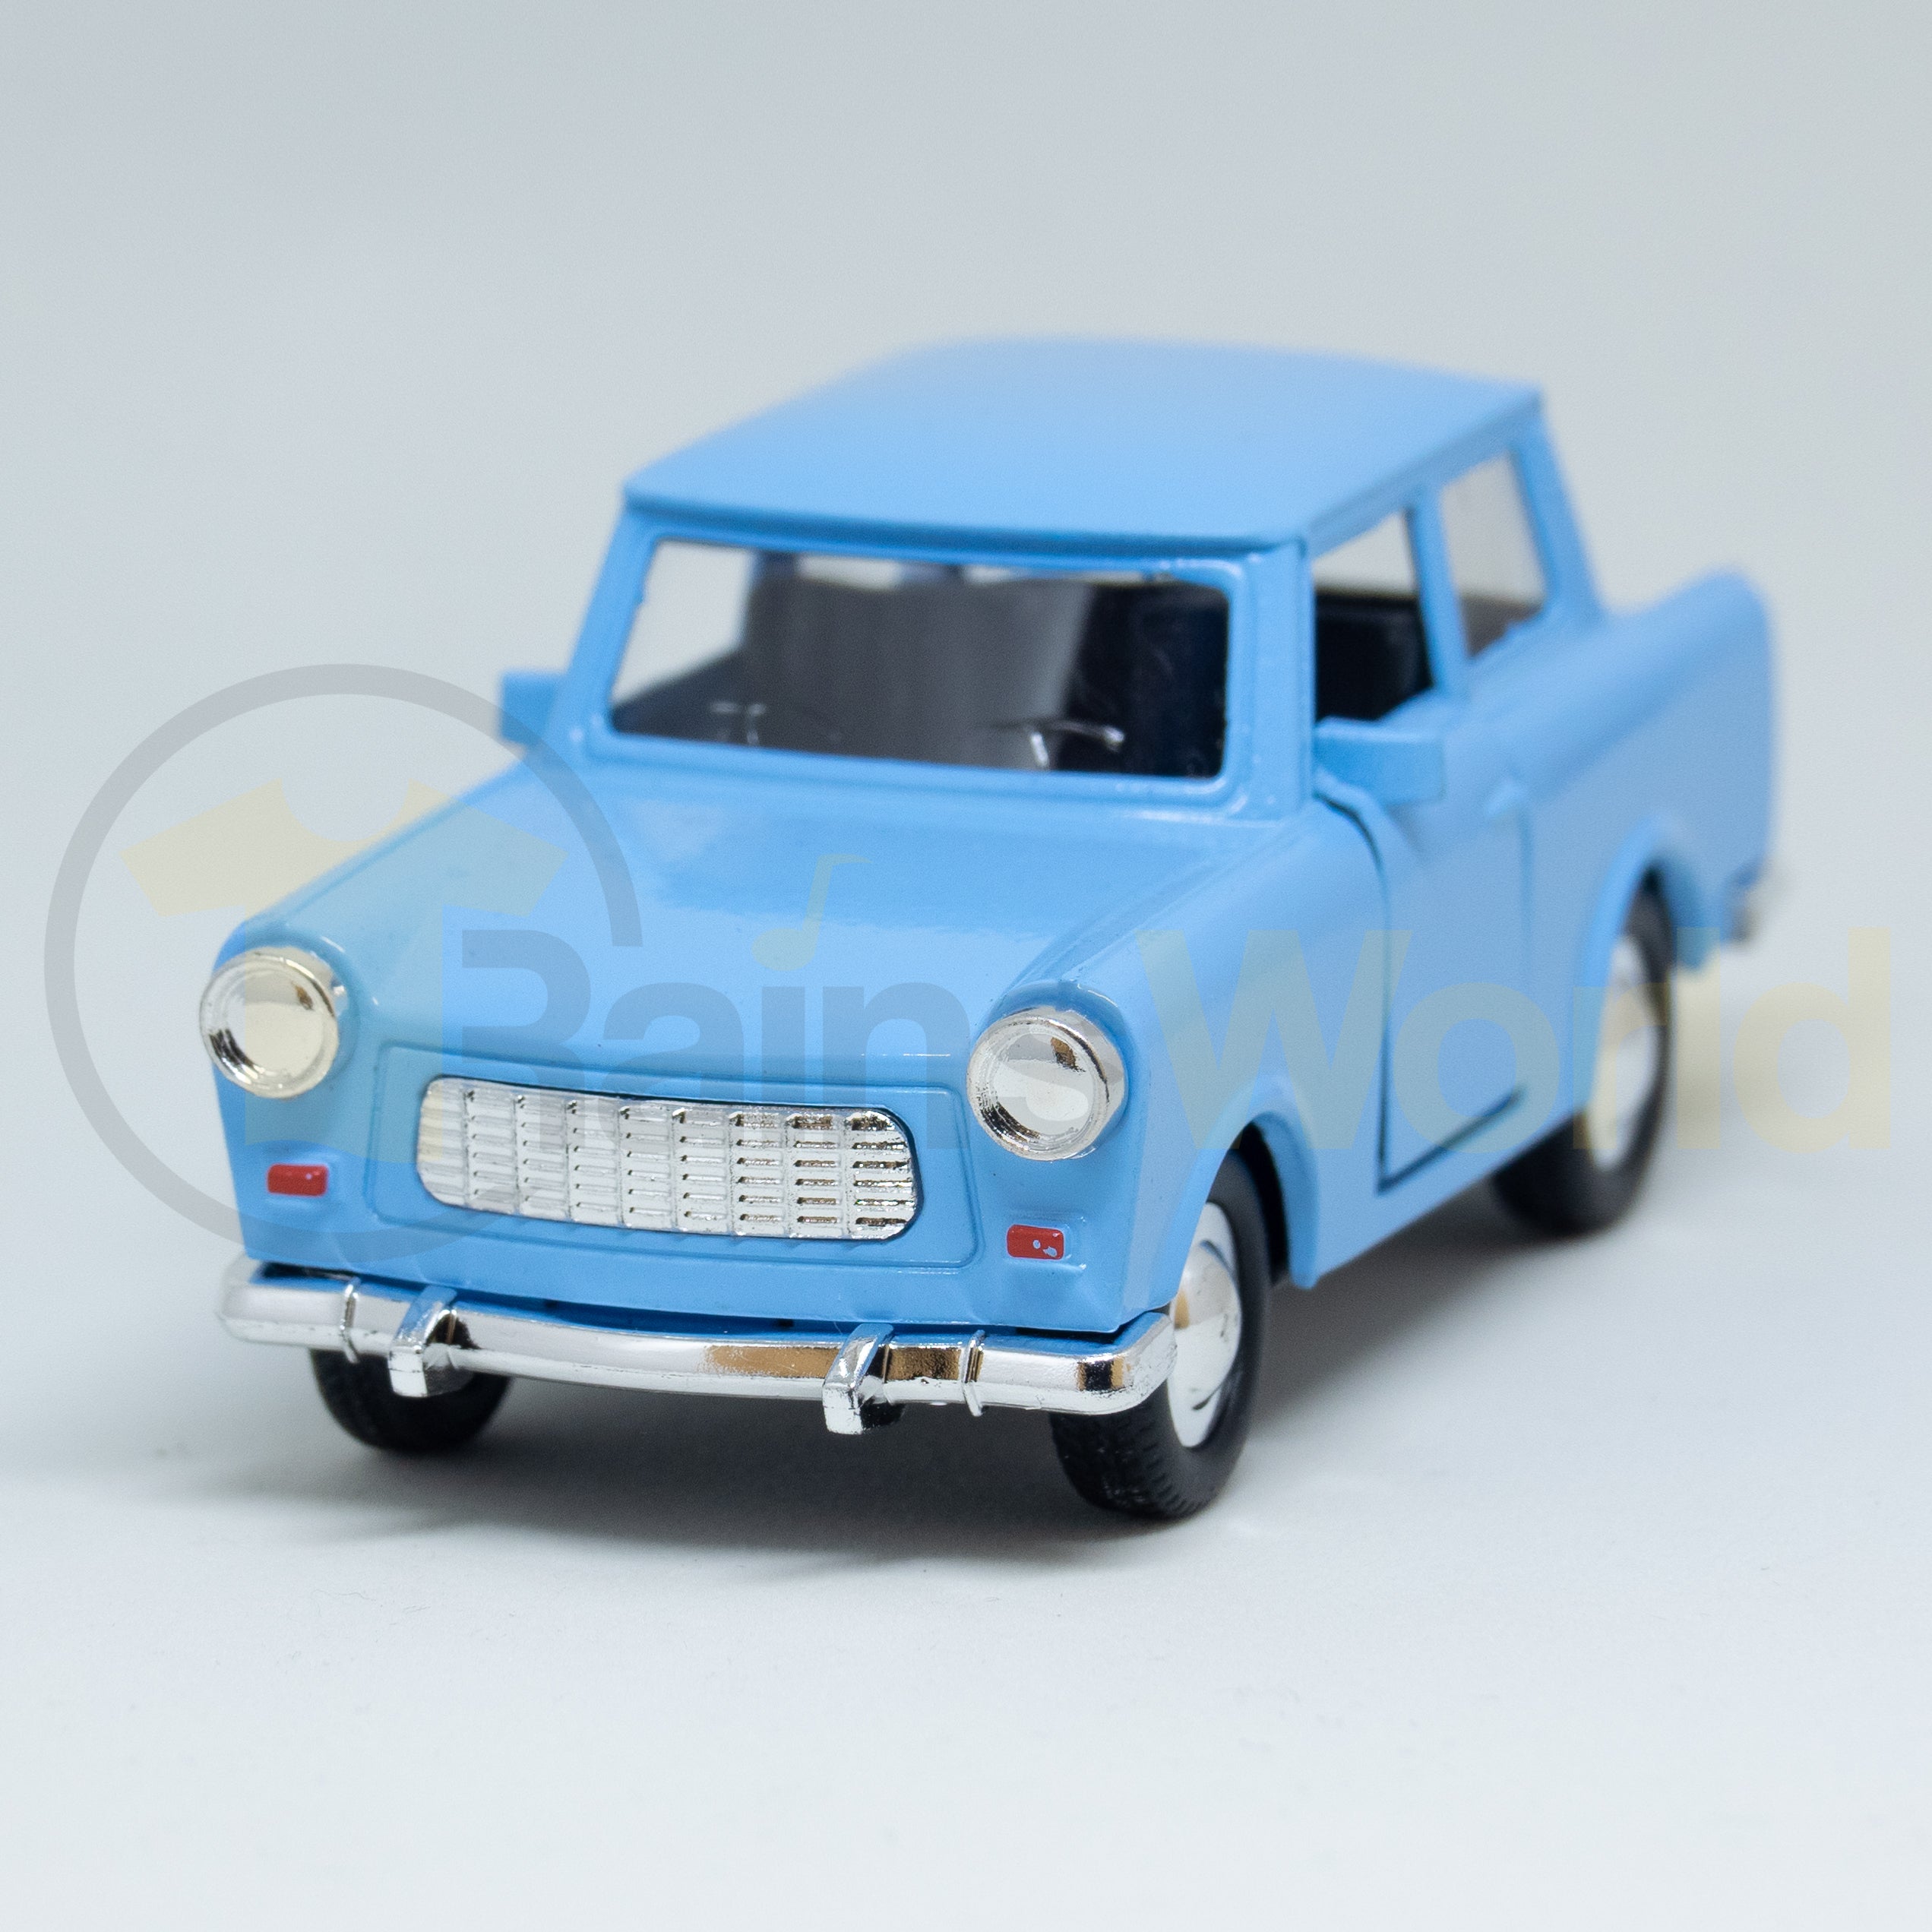 Trabant 601 Limousine Modellauto, himmelblau, 11cm lang, Aufziehfunktion, bewegliche Teile